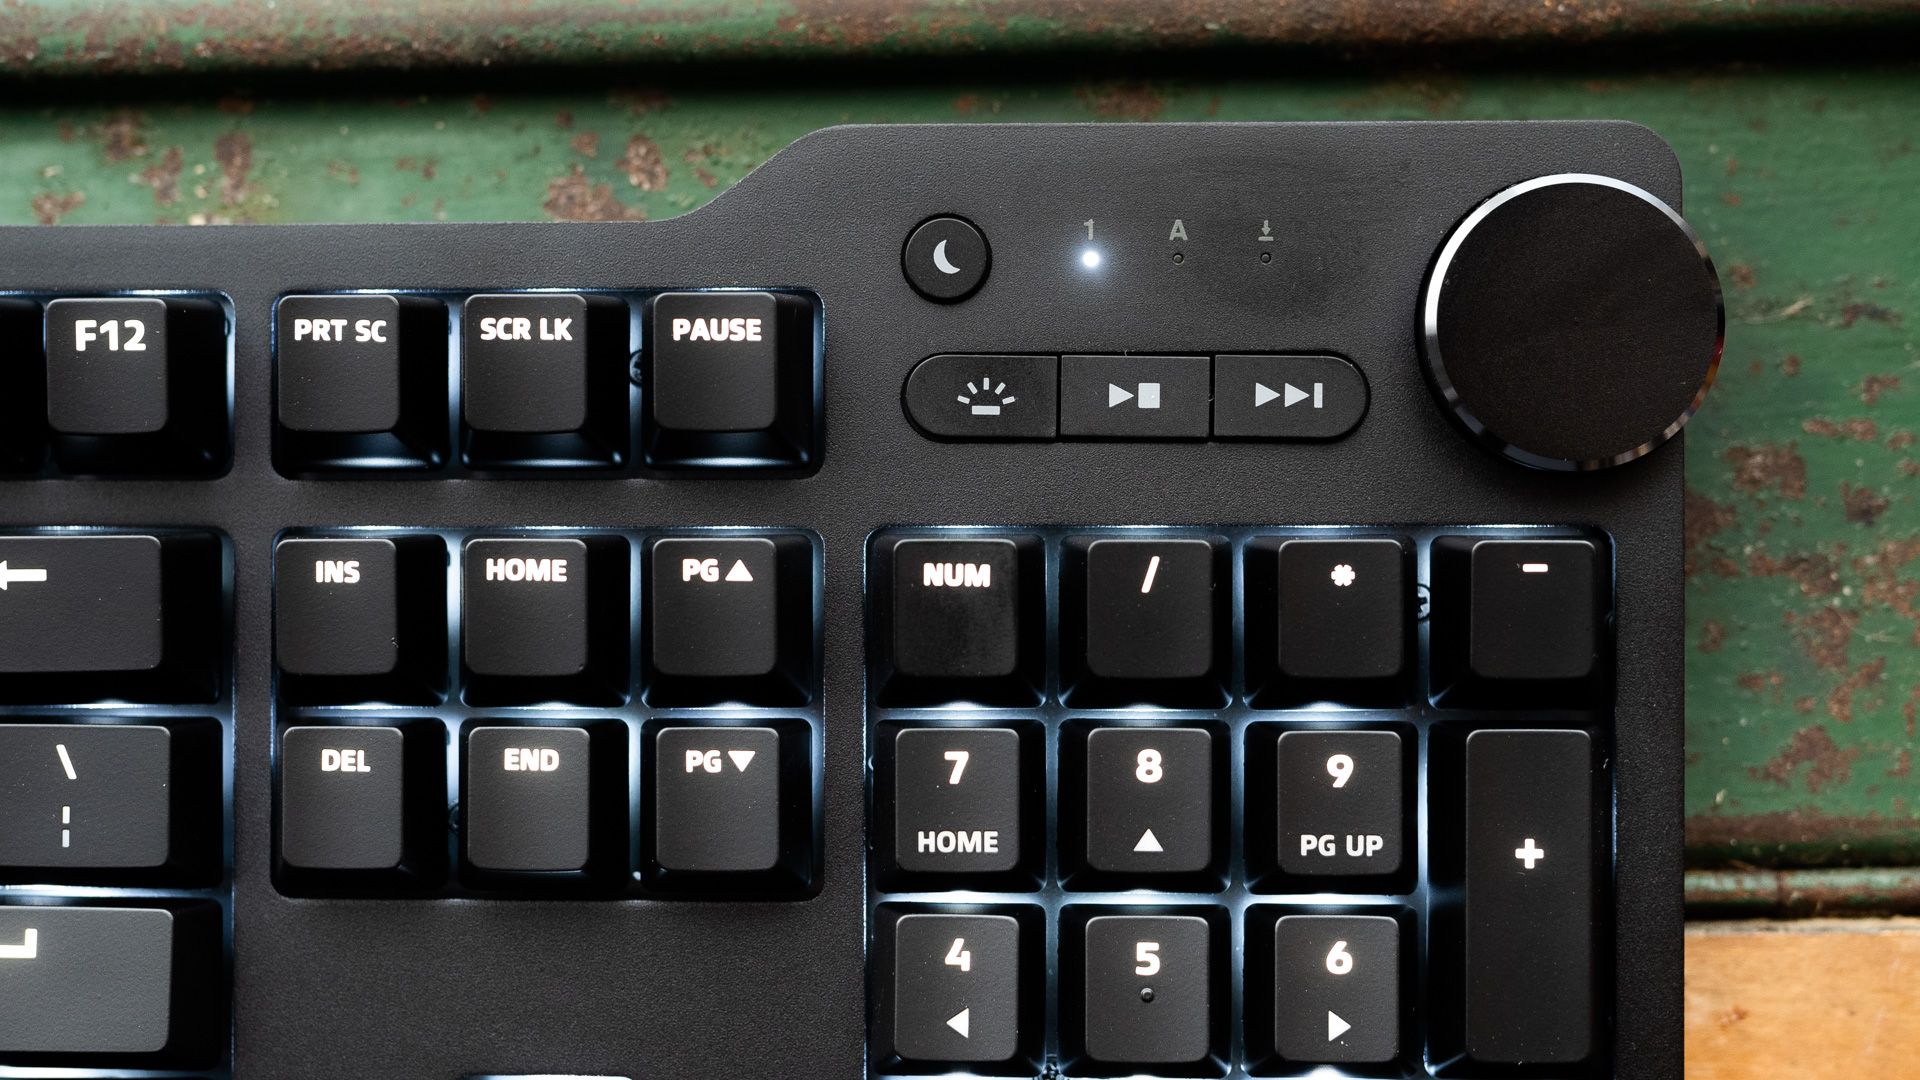 Das Keyboard 6 Professional close-up de controles personalizados